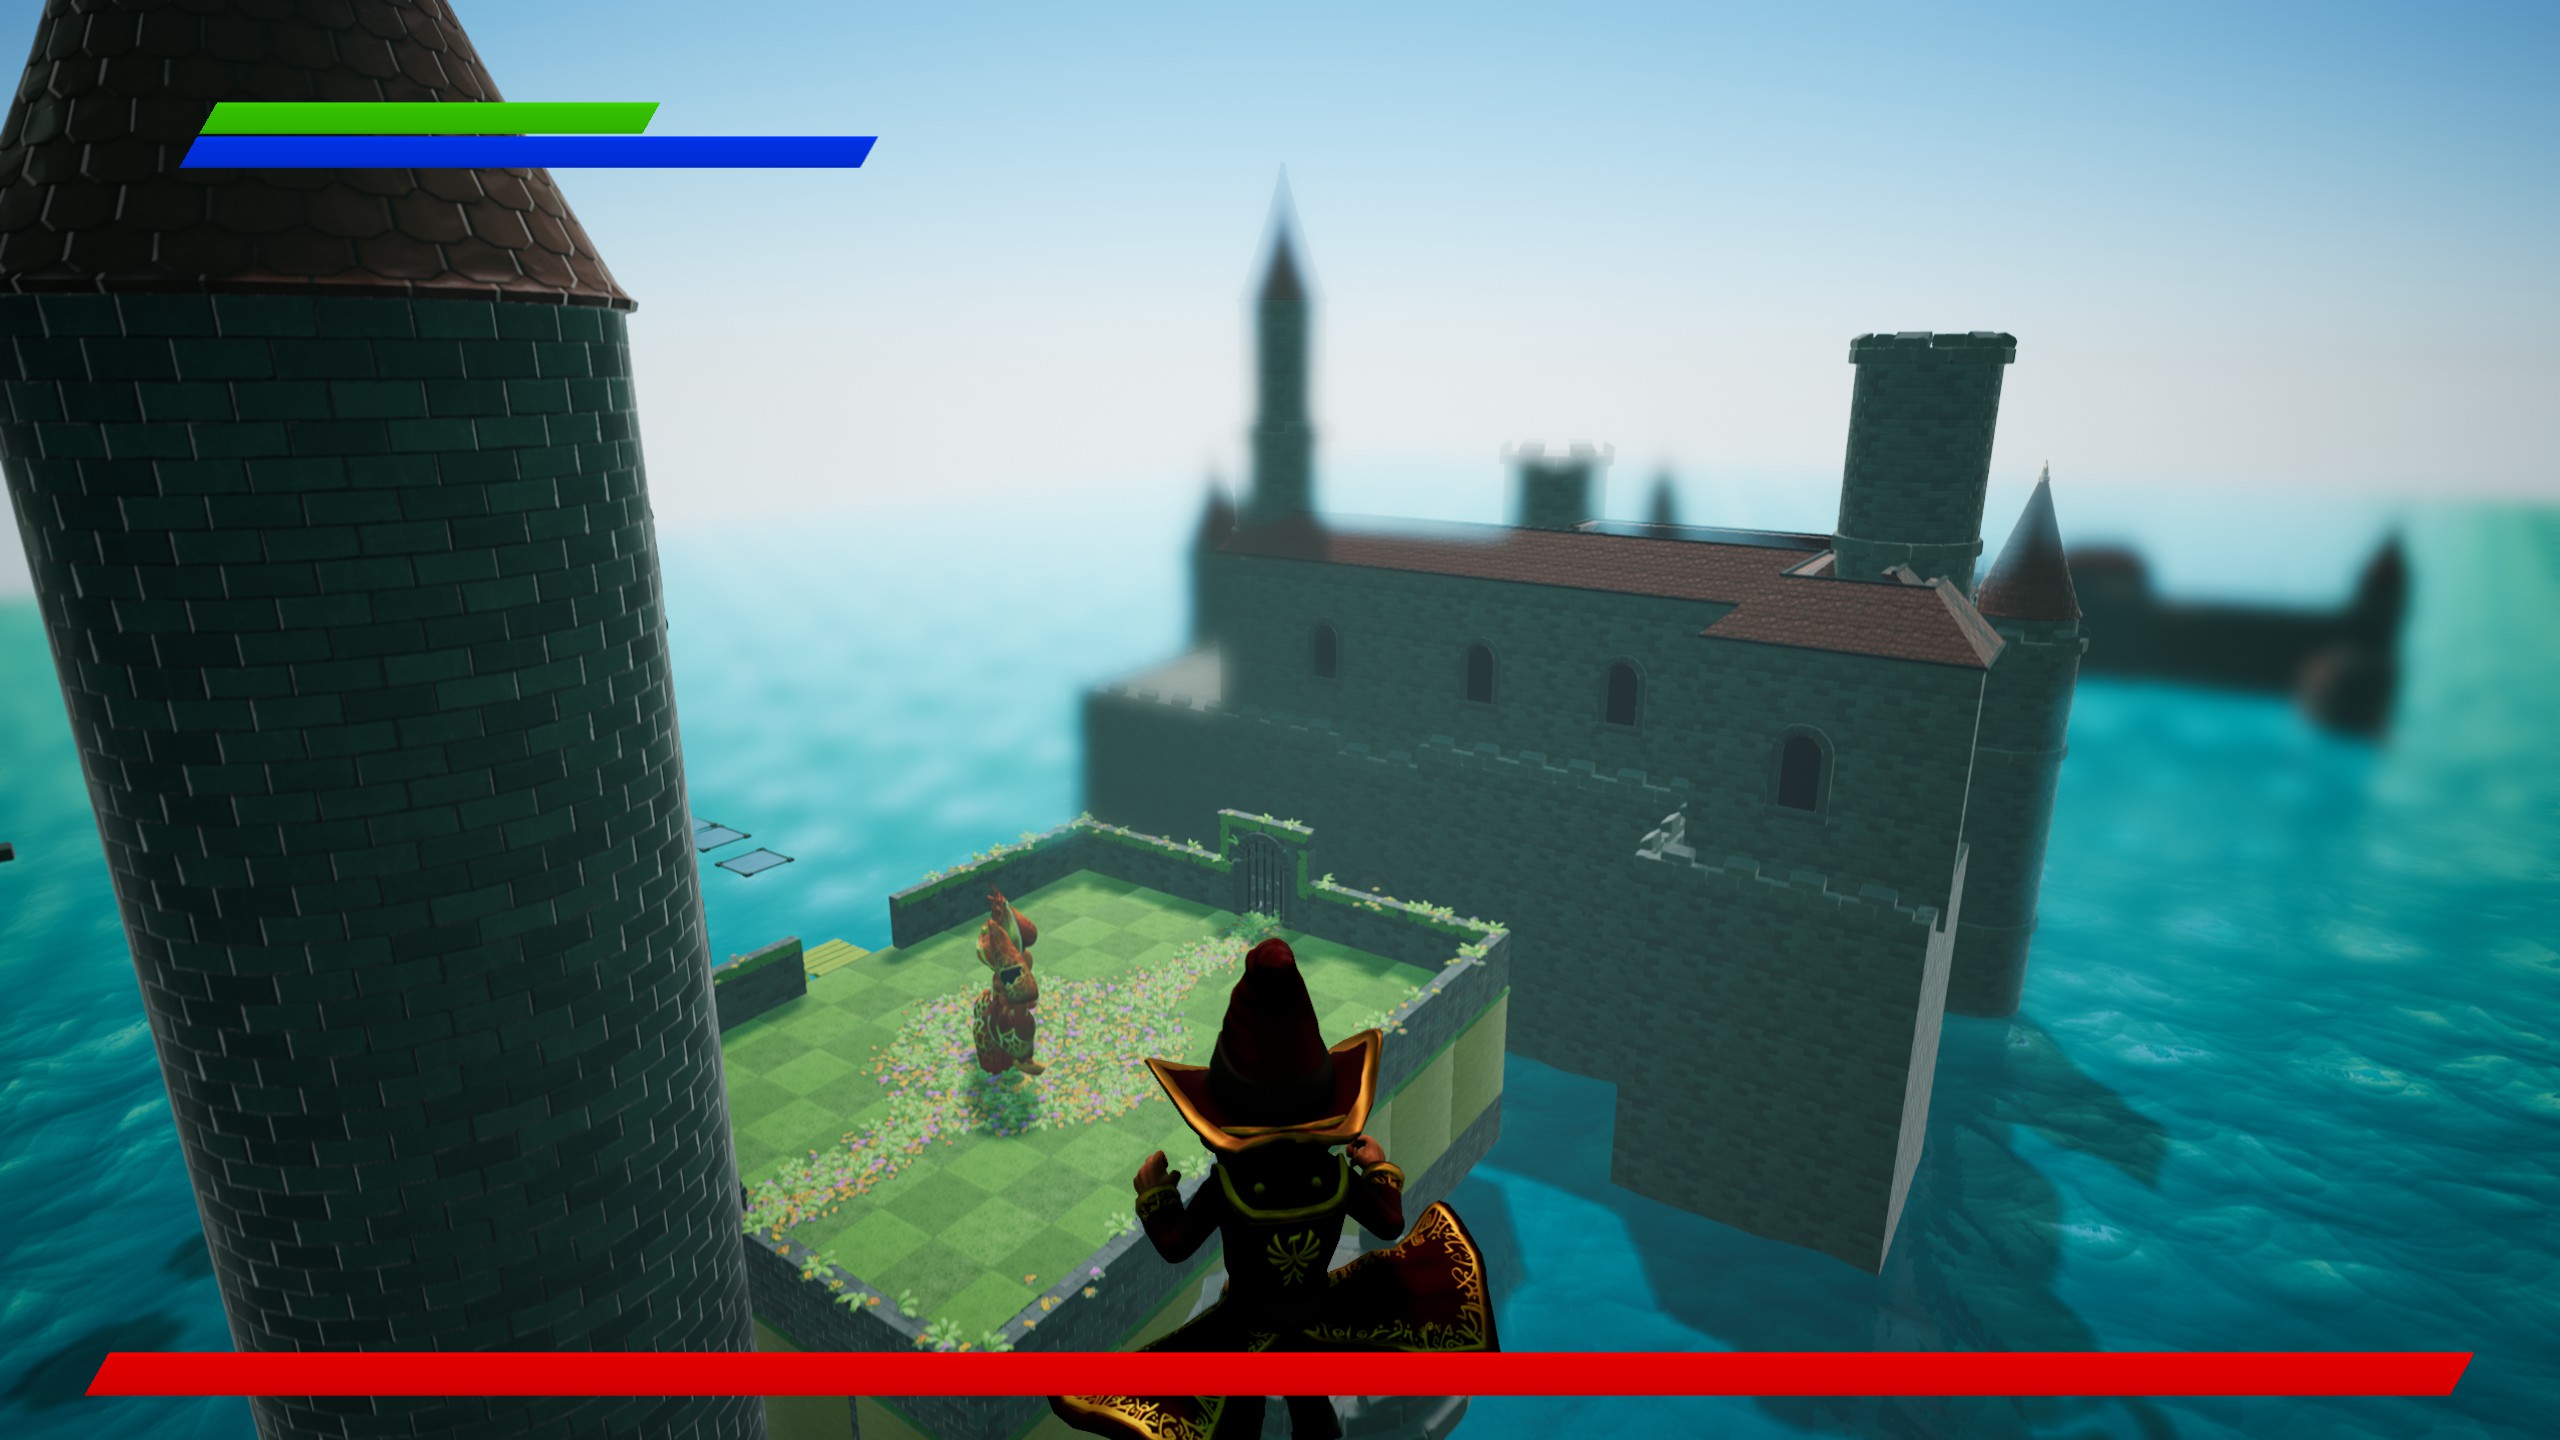 Magika Land of Fantasy screenshot